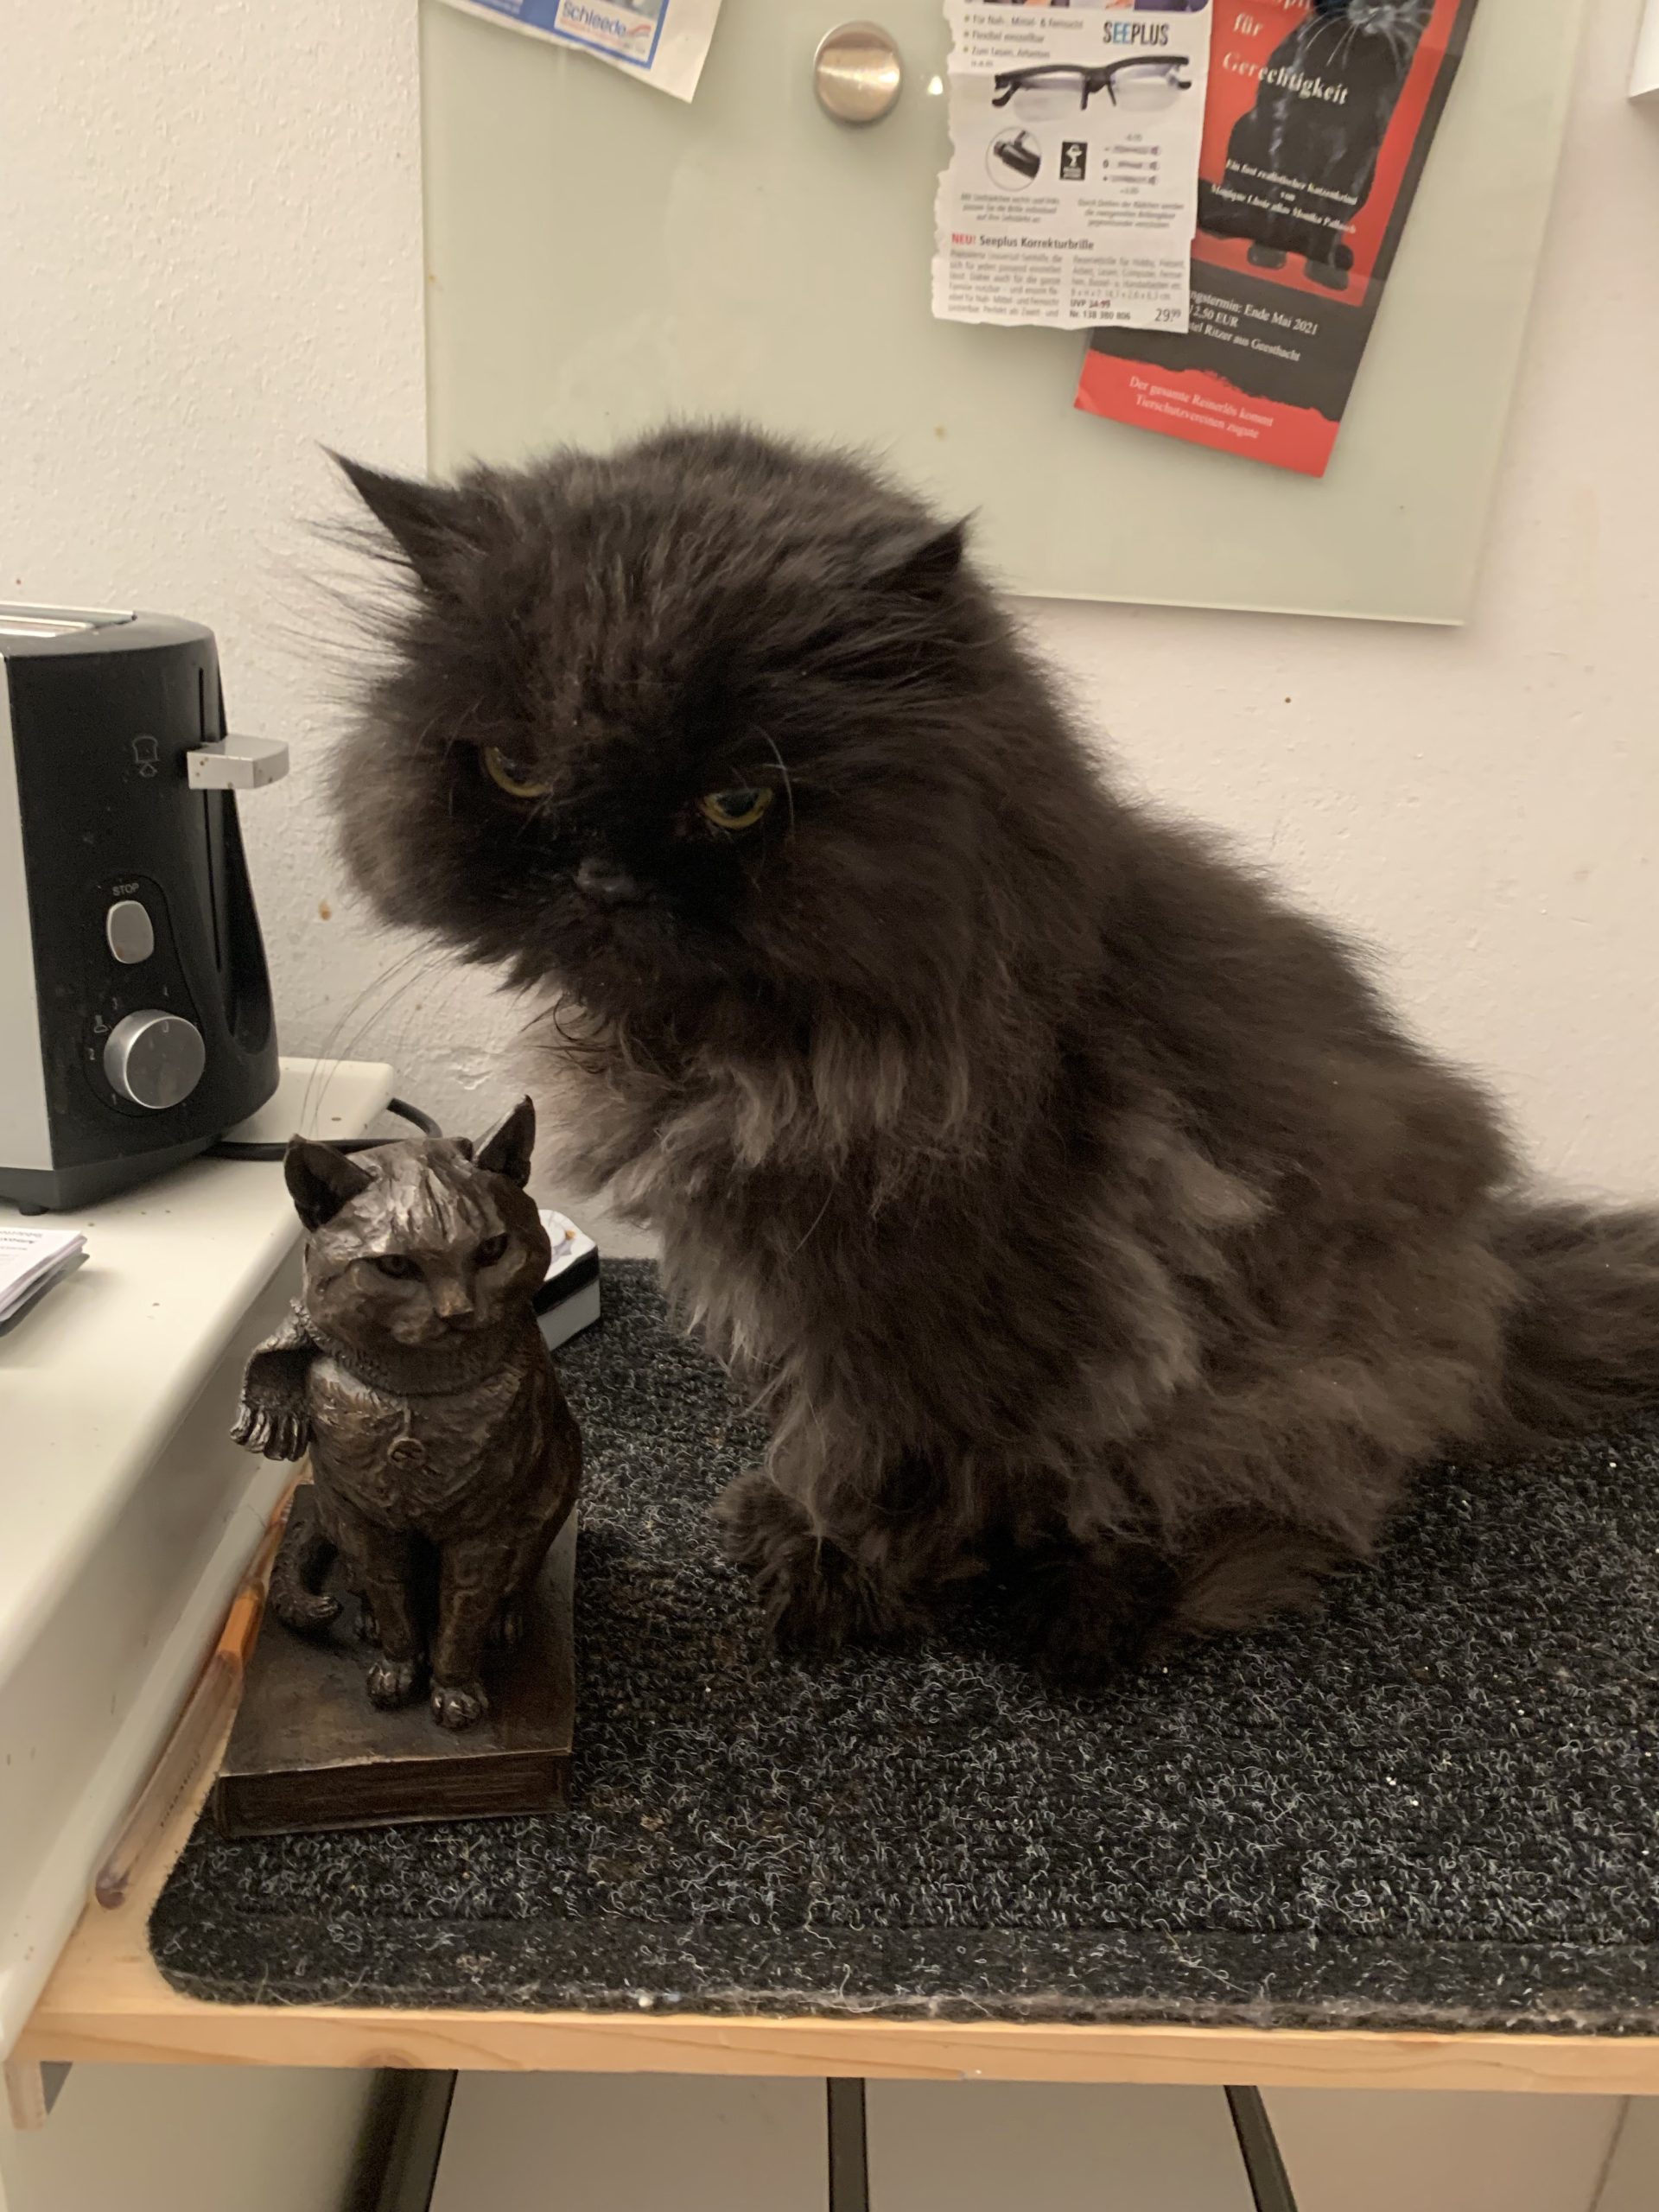 Streetcat bob statue with cat